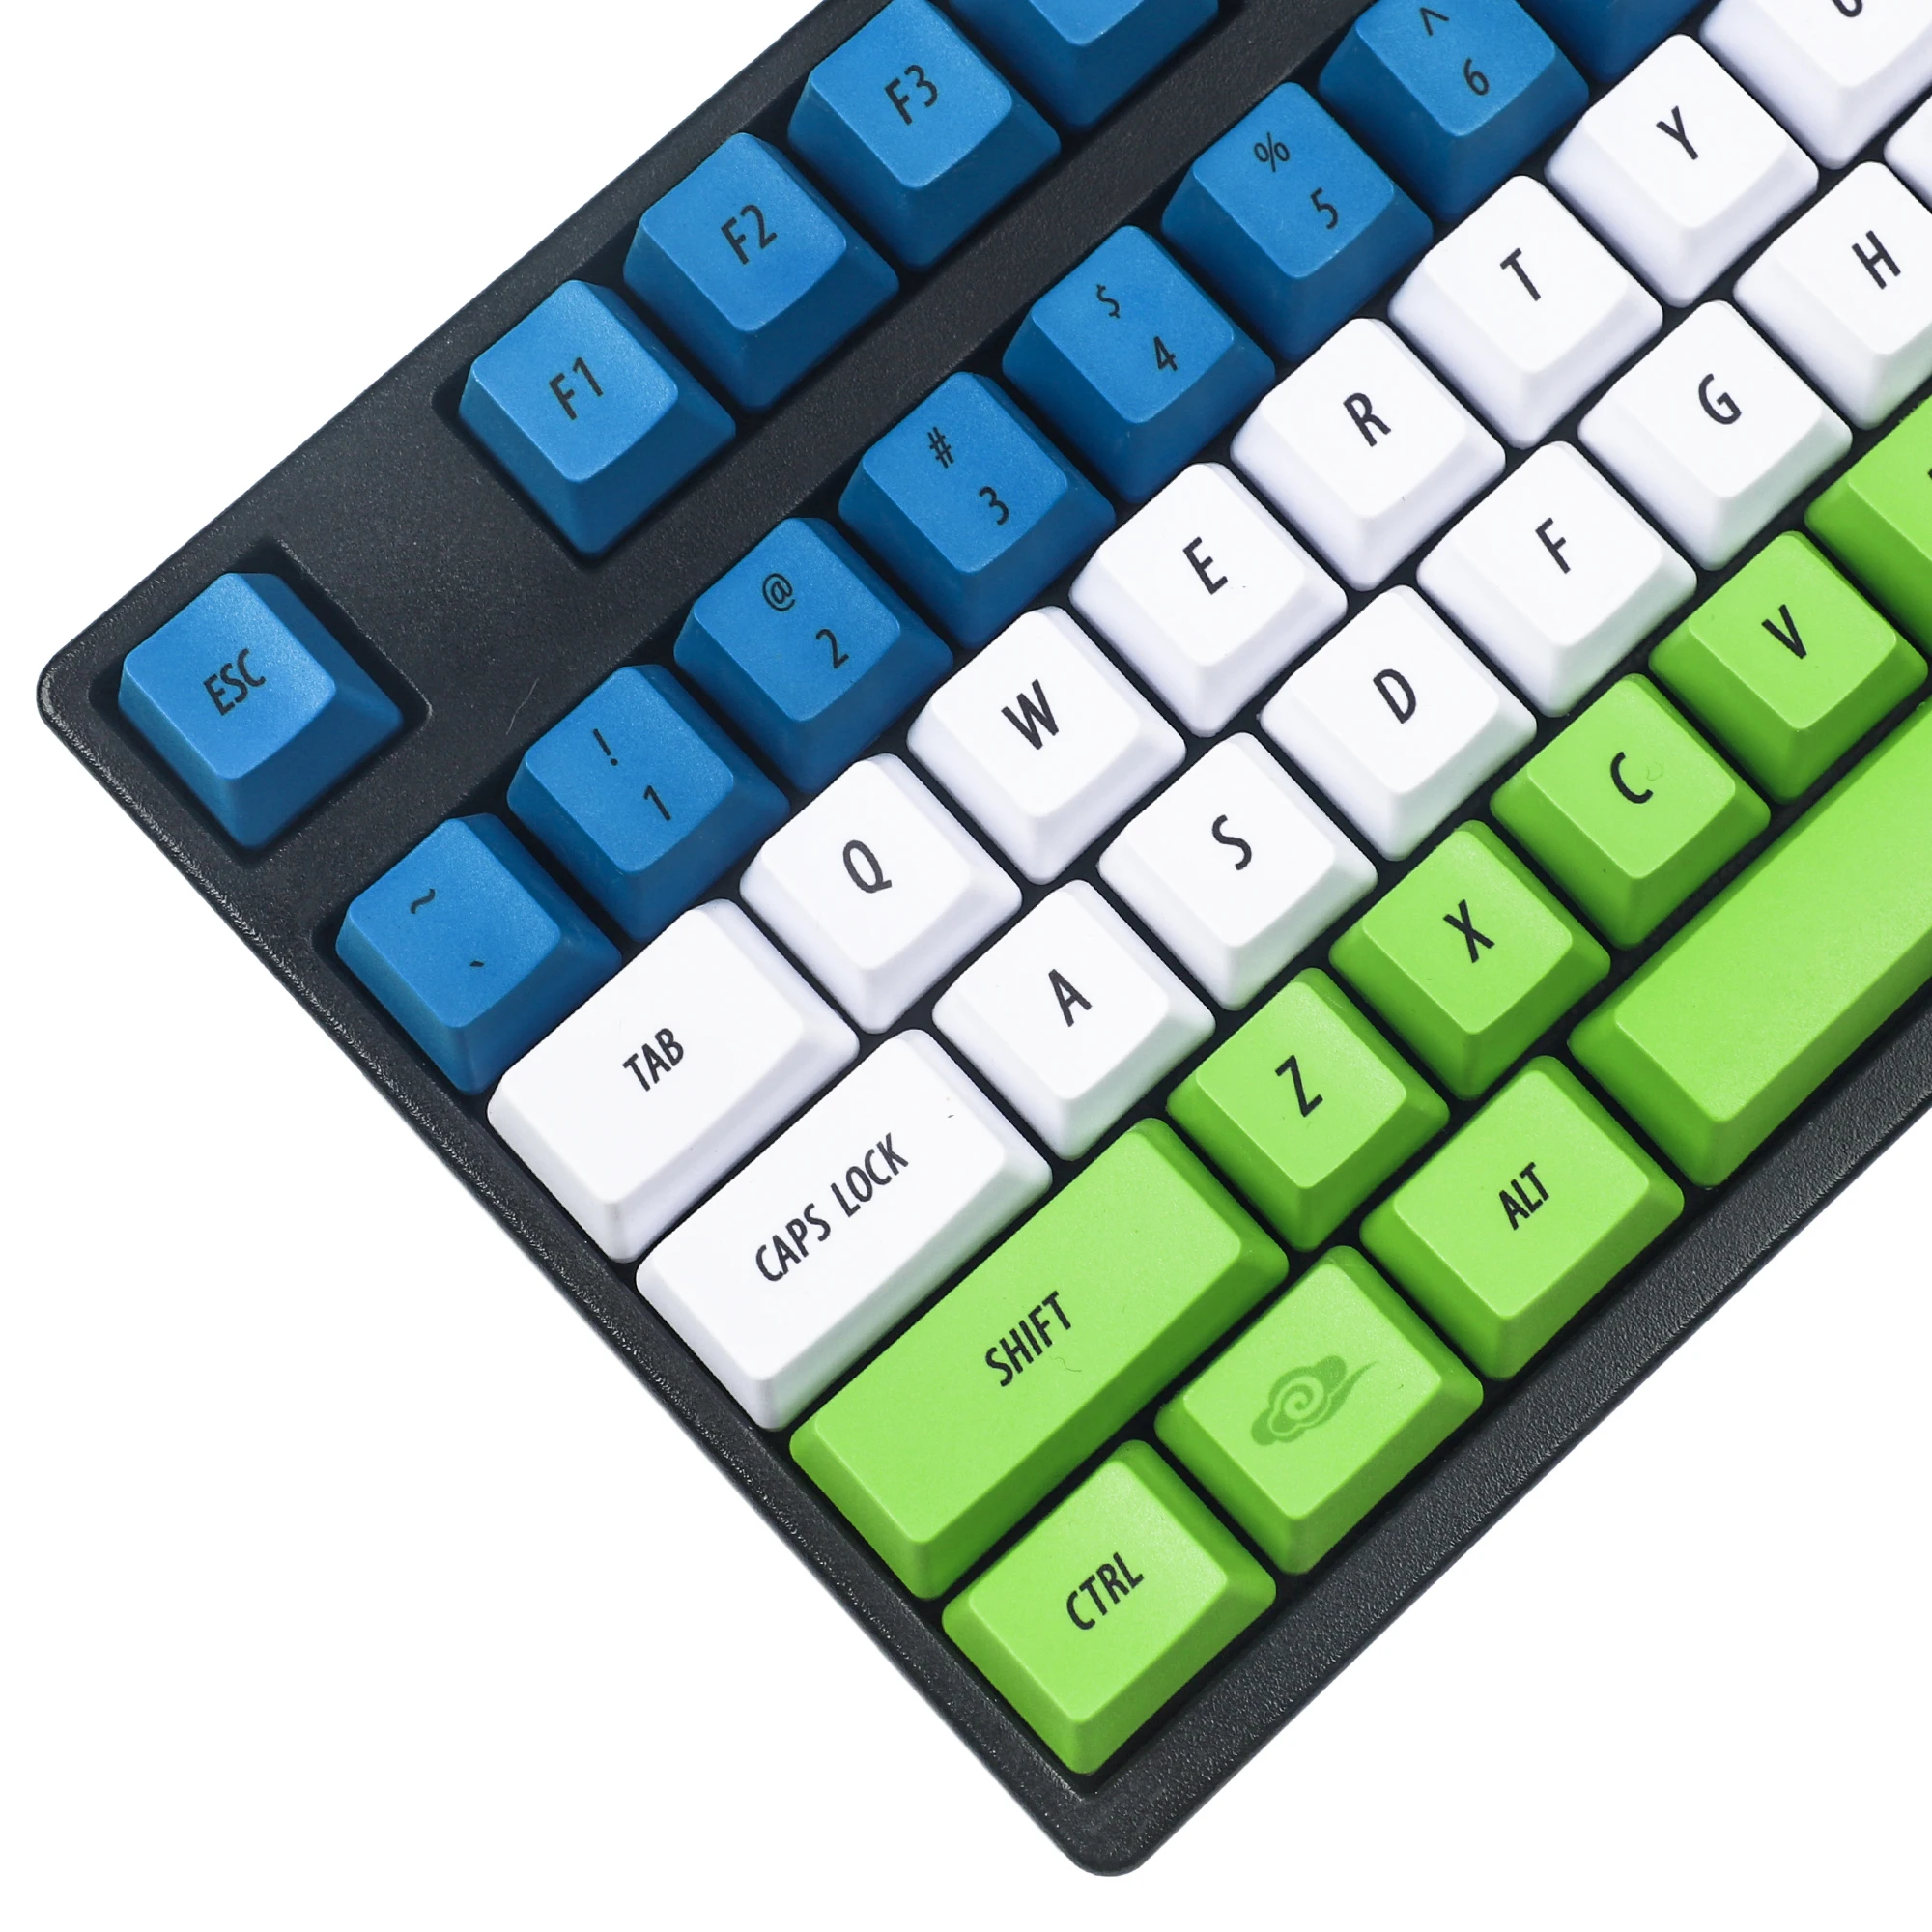 

132 Custom Keycaps Pan Gu Green Blue White OEM Profile Dye Sub PBT Key Caps For MX Keyboard 104 87 61 96 75 GK64 68